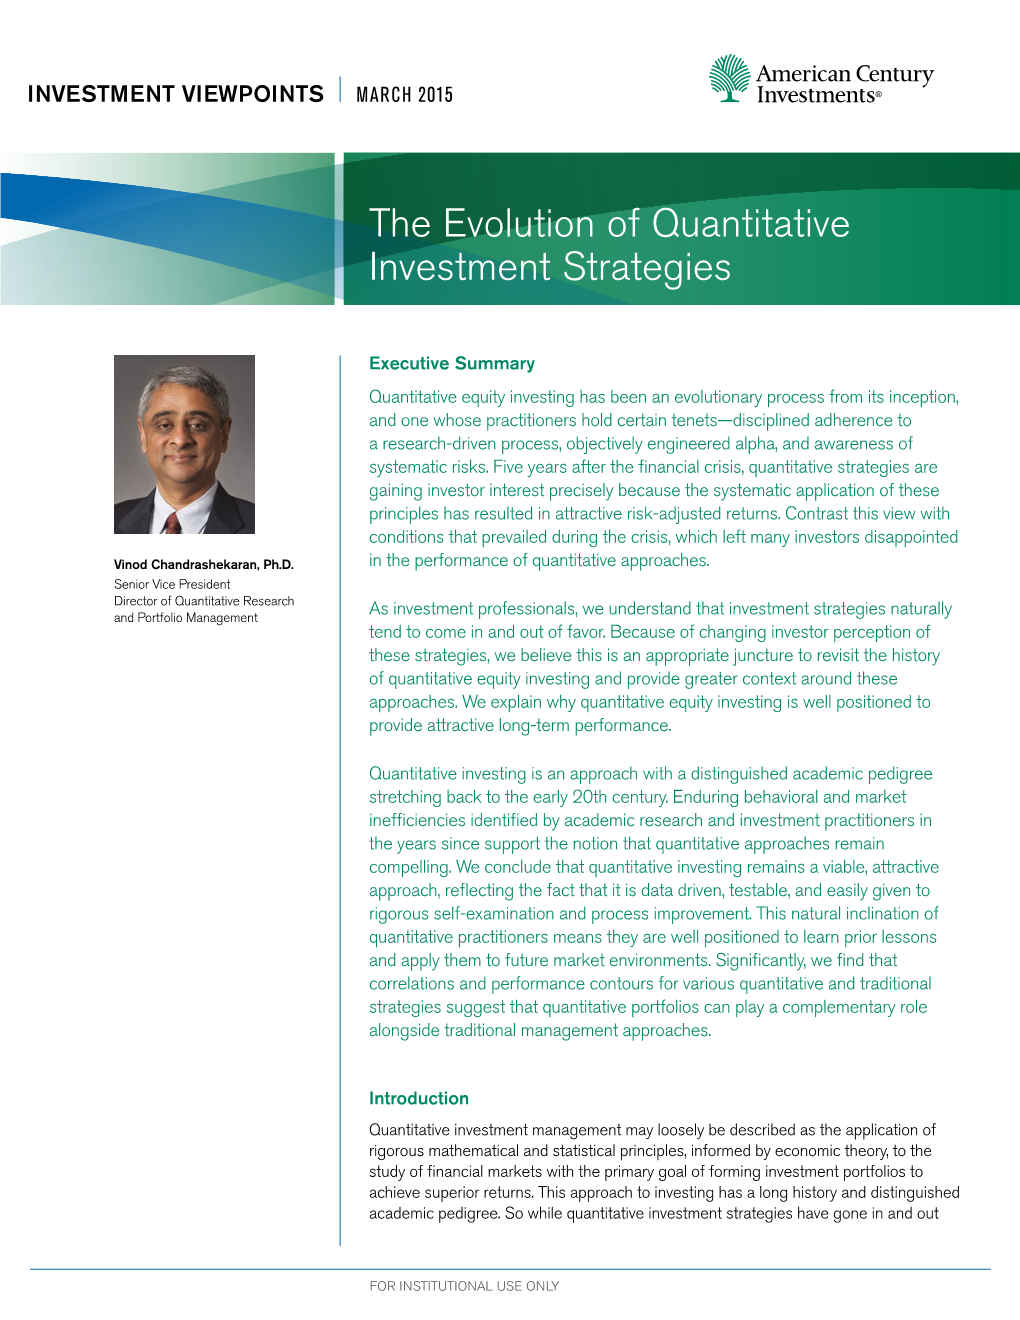 The Evolution of Quantitative Investment Strategies